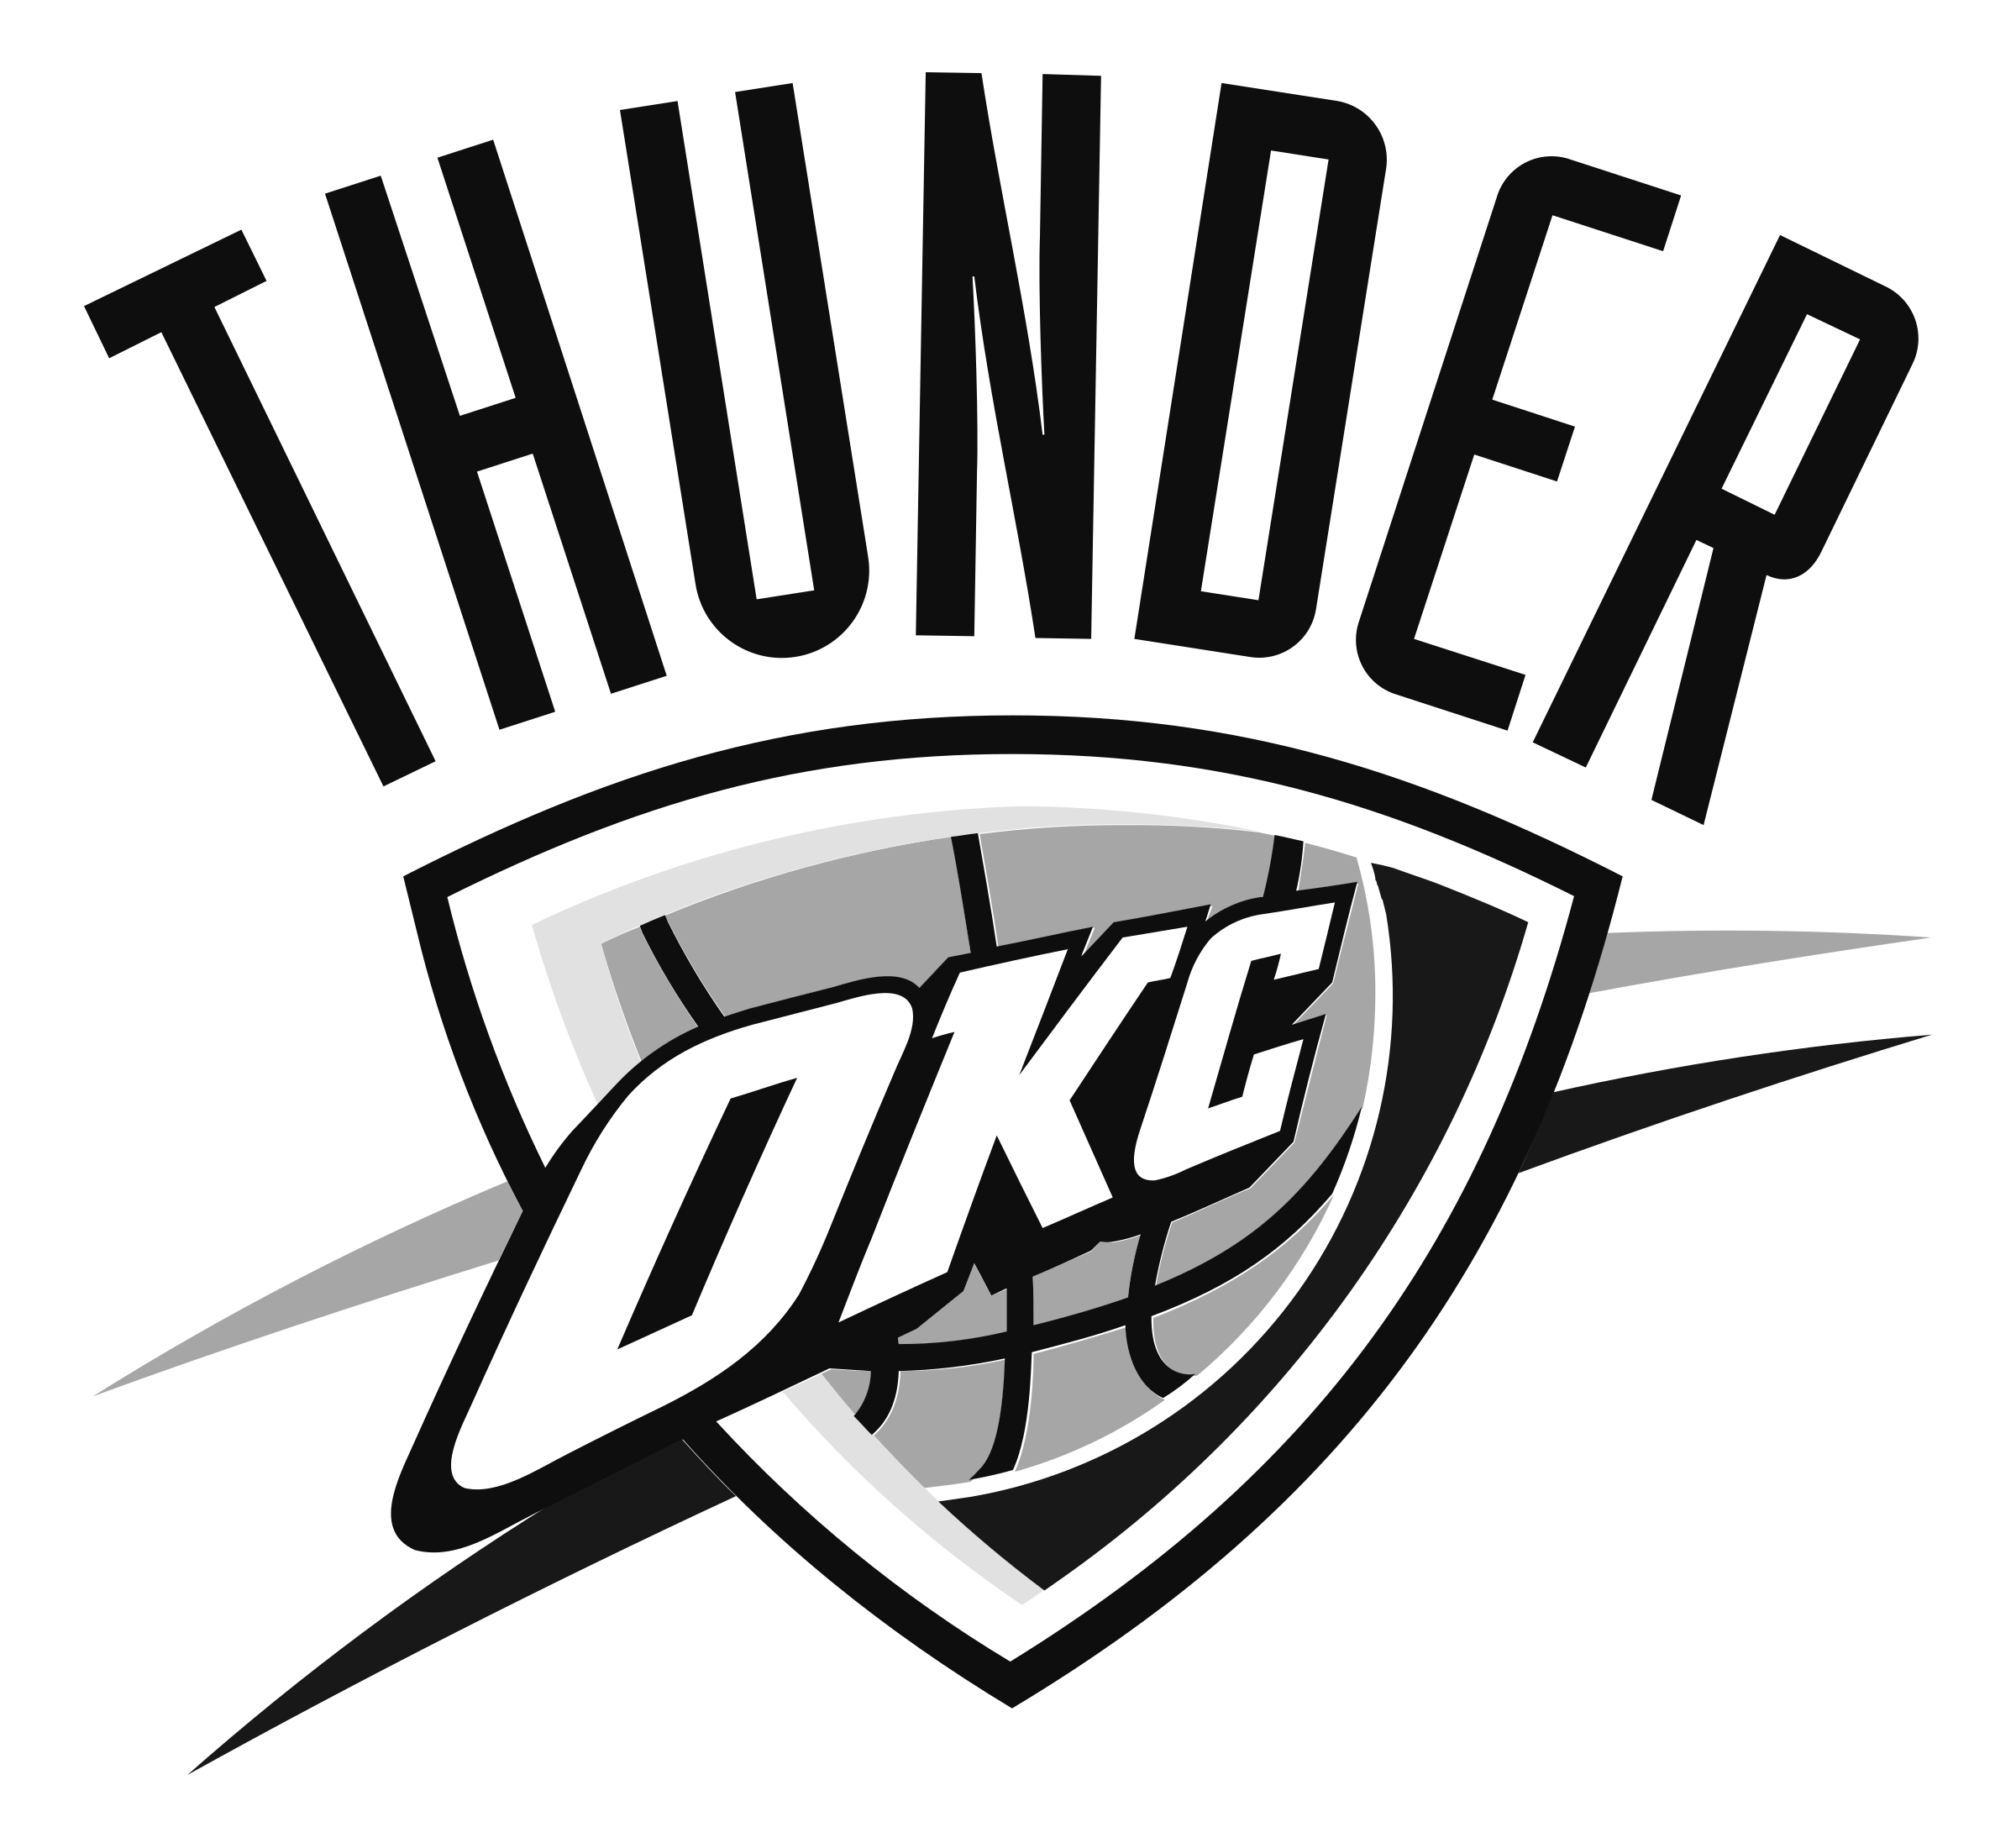 Oklahoma City Thunder logo black and white